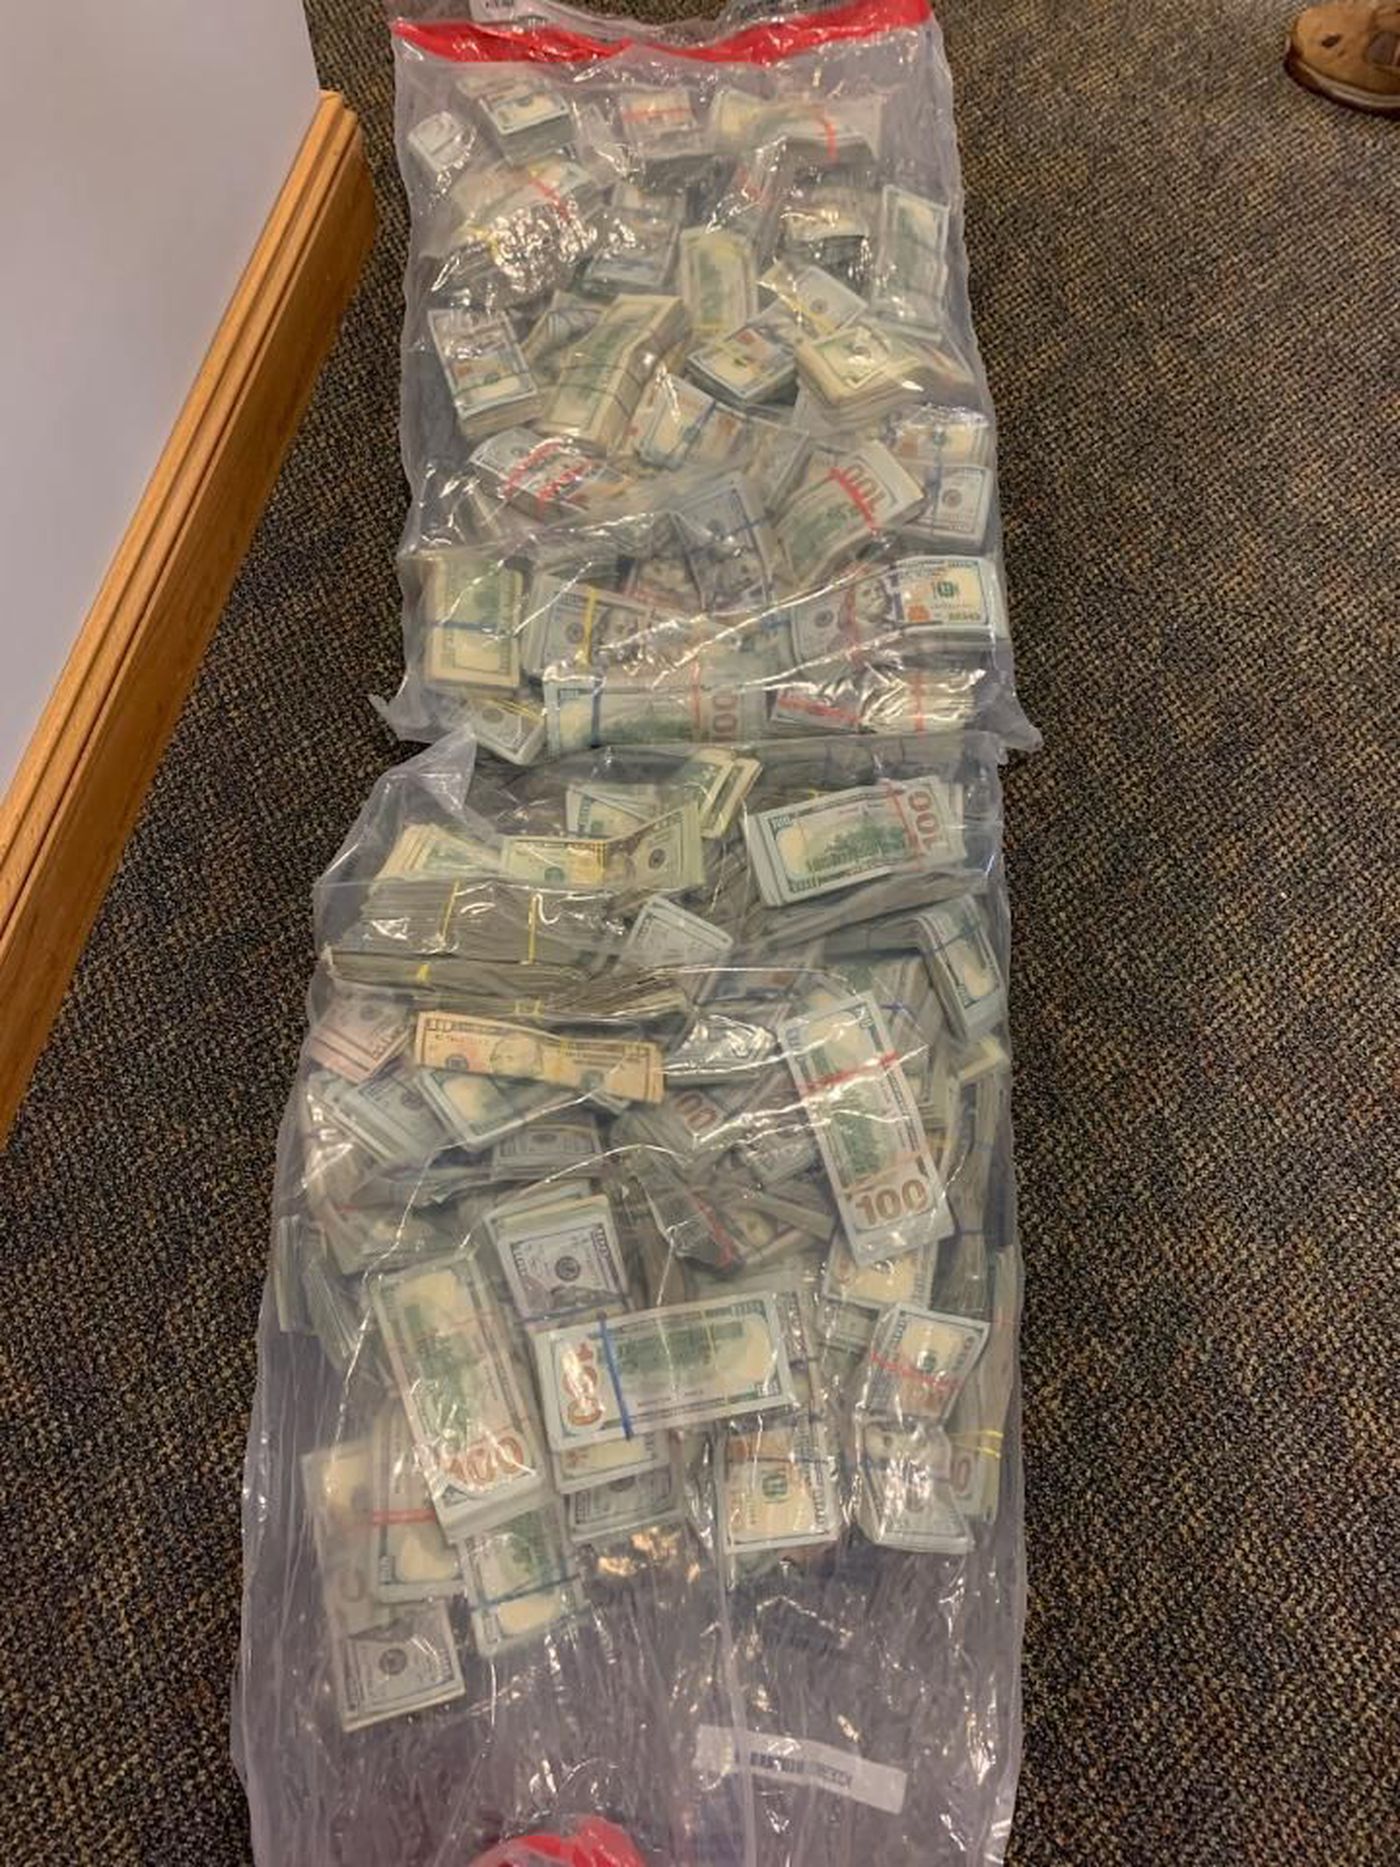 Man arrested, officials seize 288 pounds of marijuana, $1 ...